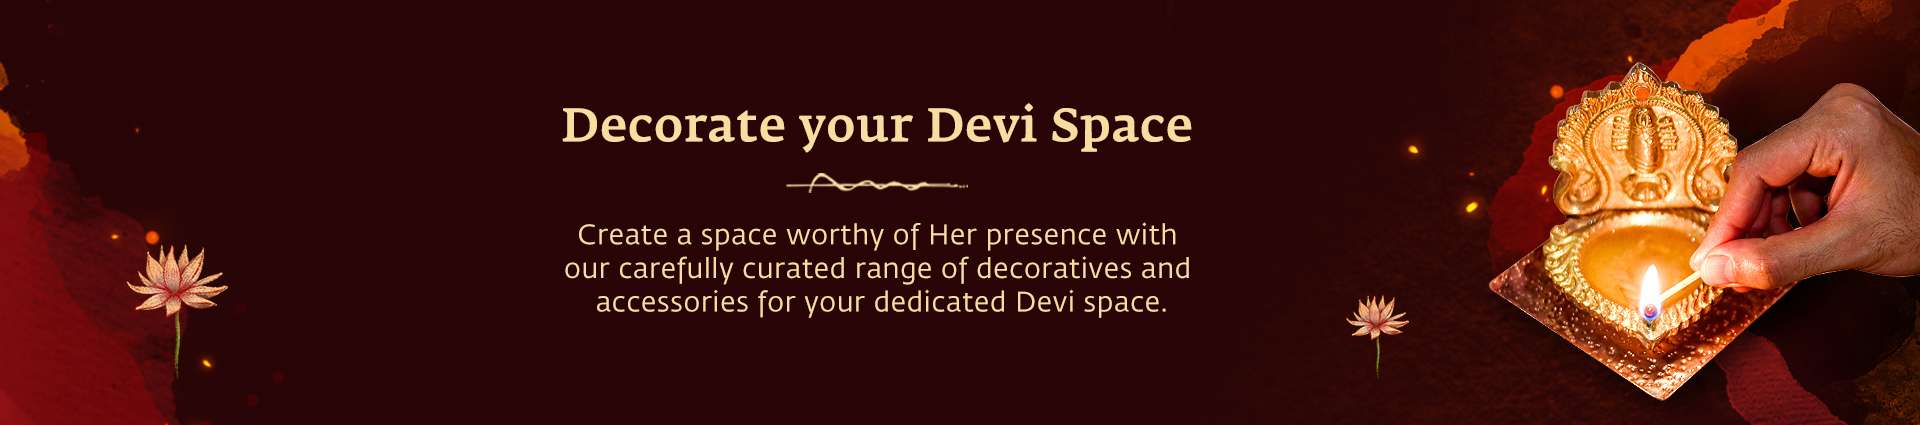 Devi space